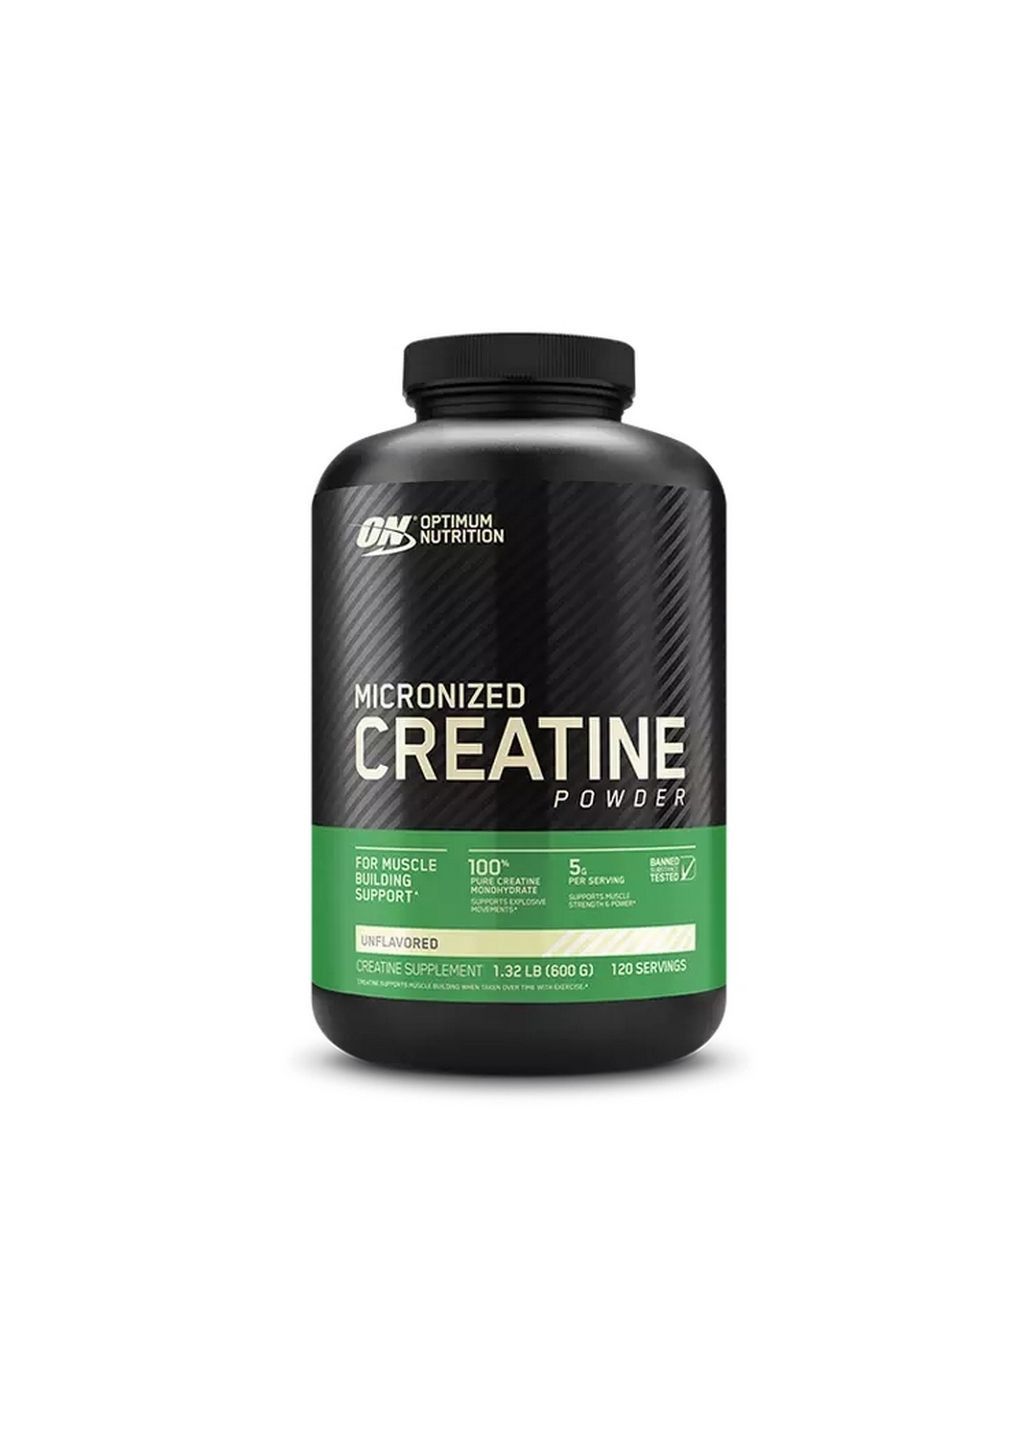 Креатин Optimum Micronized Creatine Powder, 600 грам Optimum Nutrition (293415852)